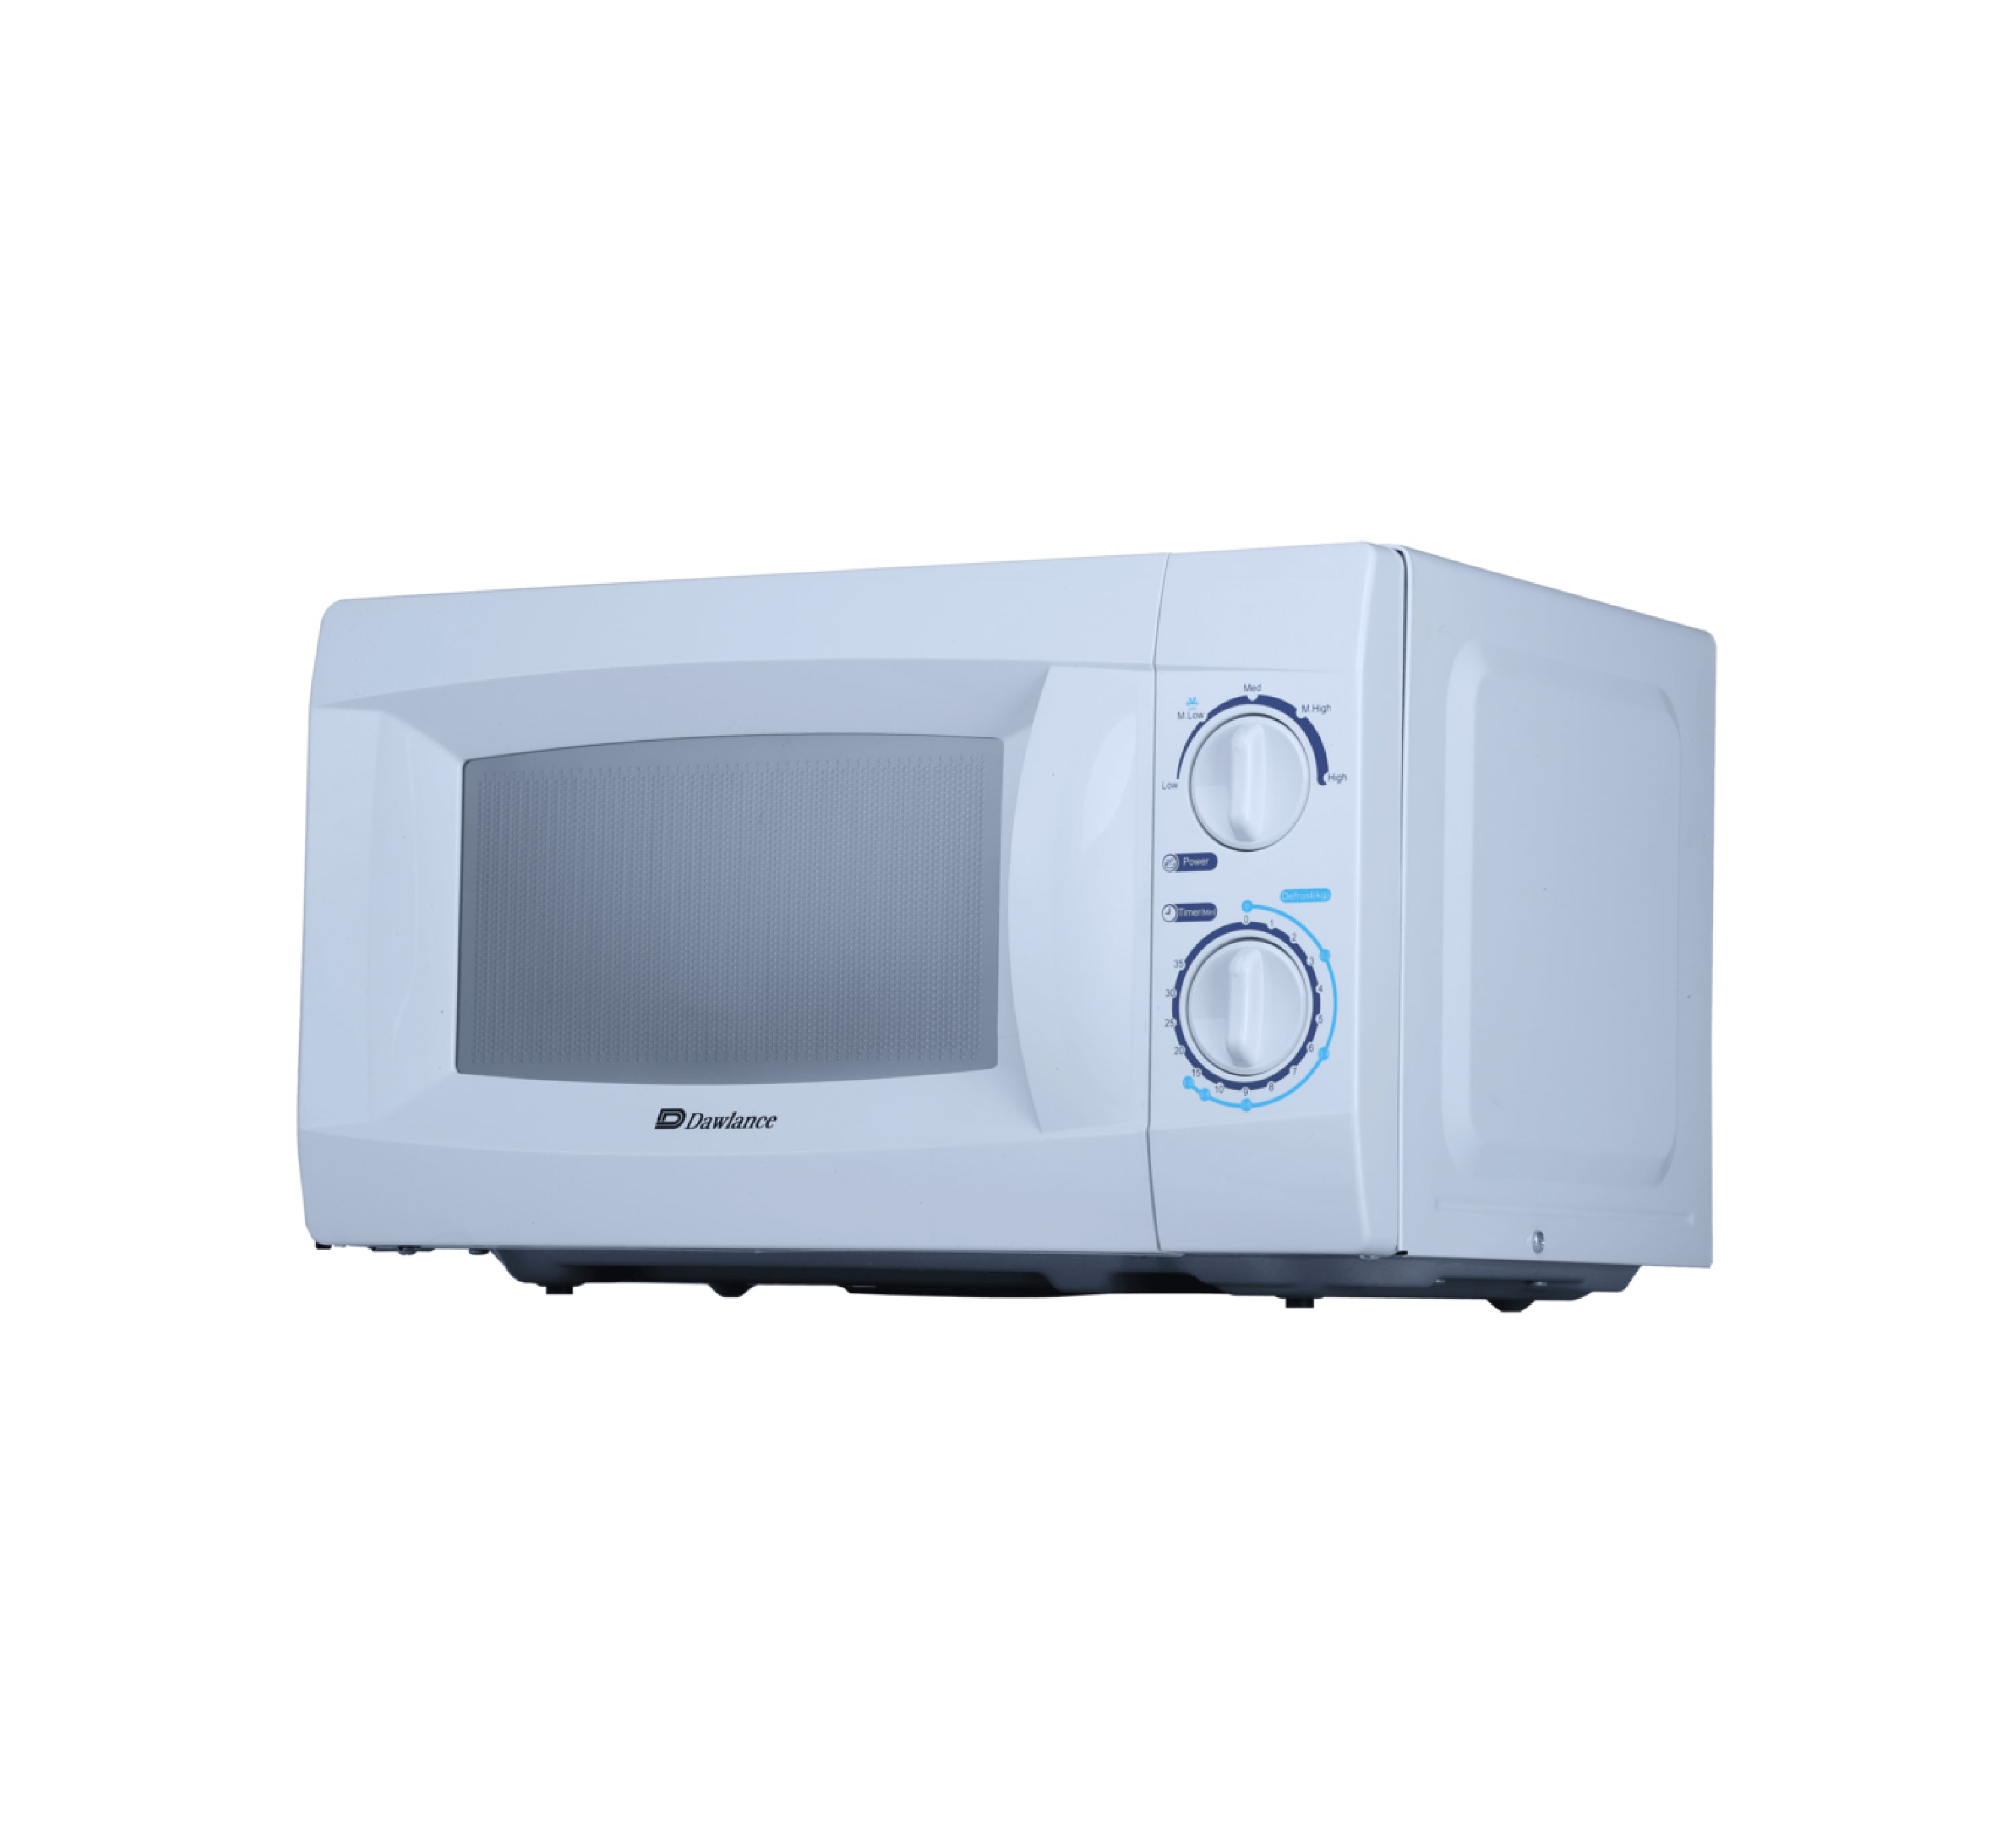 DAWLANCE MD-15 - Heating Microwave Oven